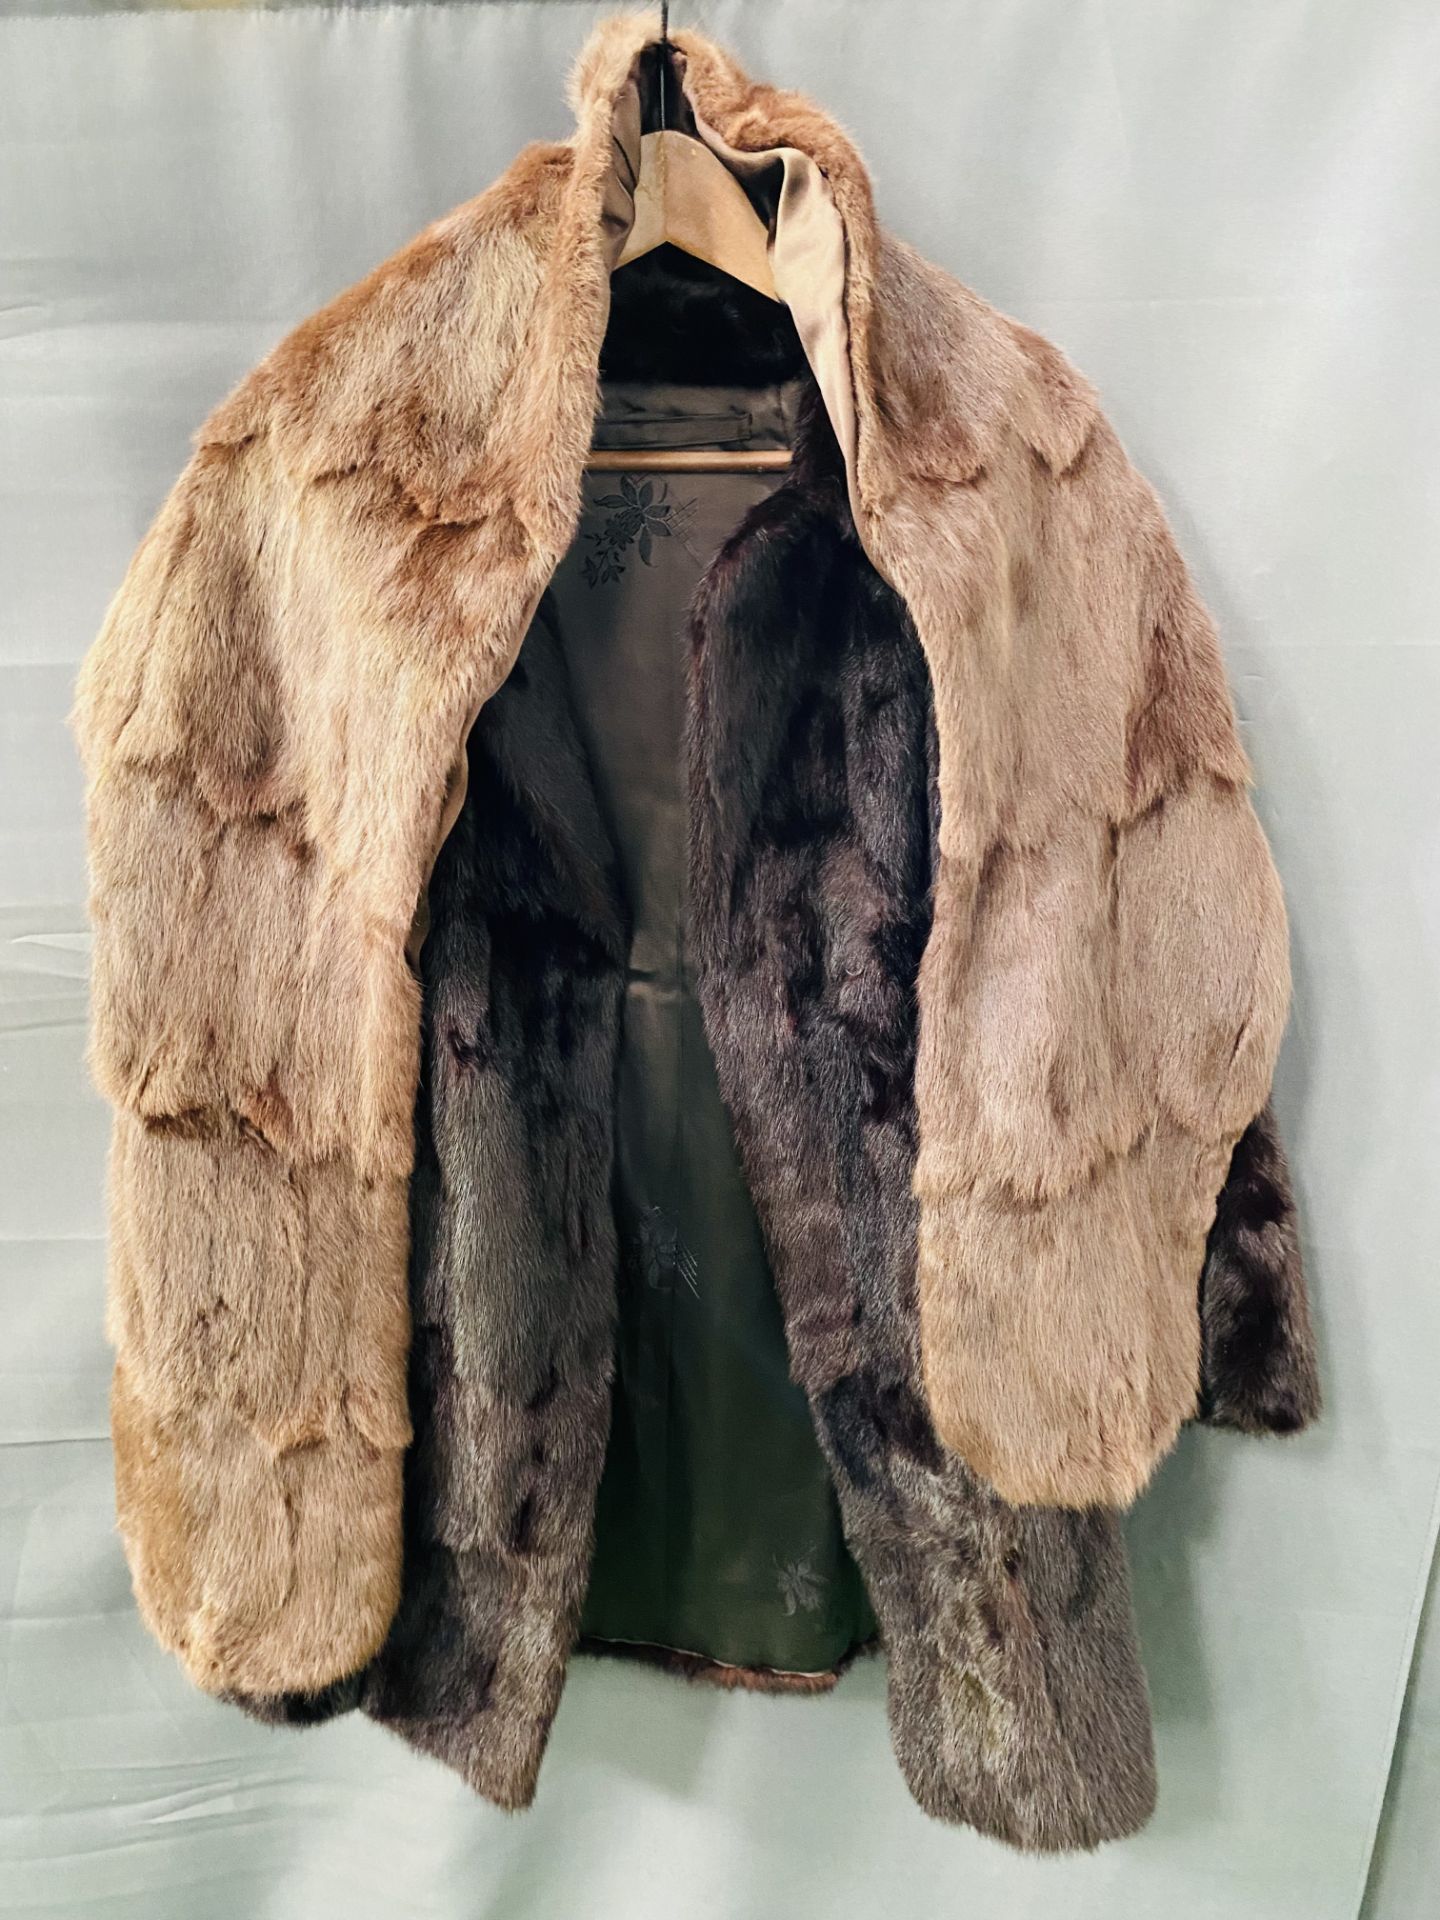 Ladies mink coat together with a fur stole - Bild 5 aus 5